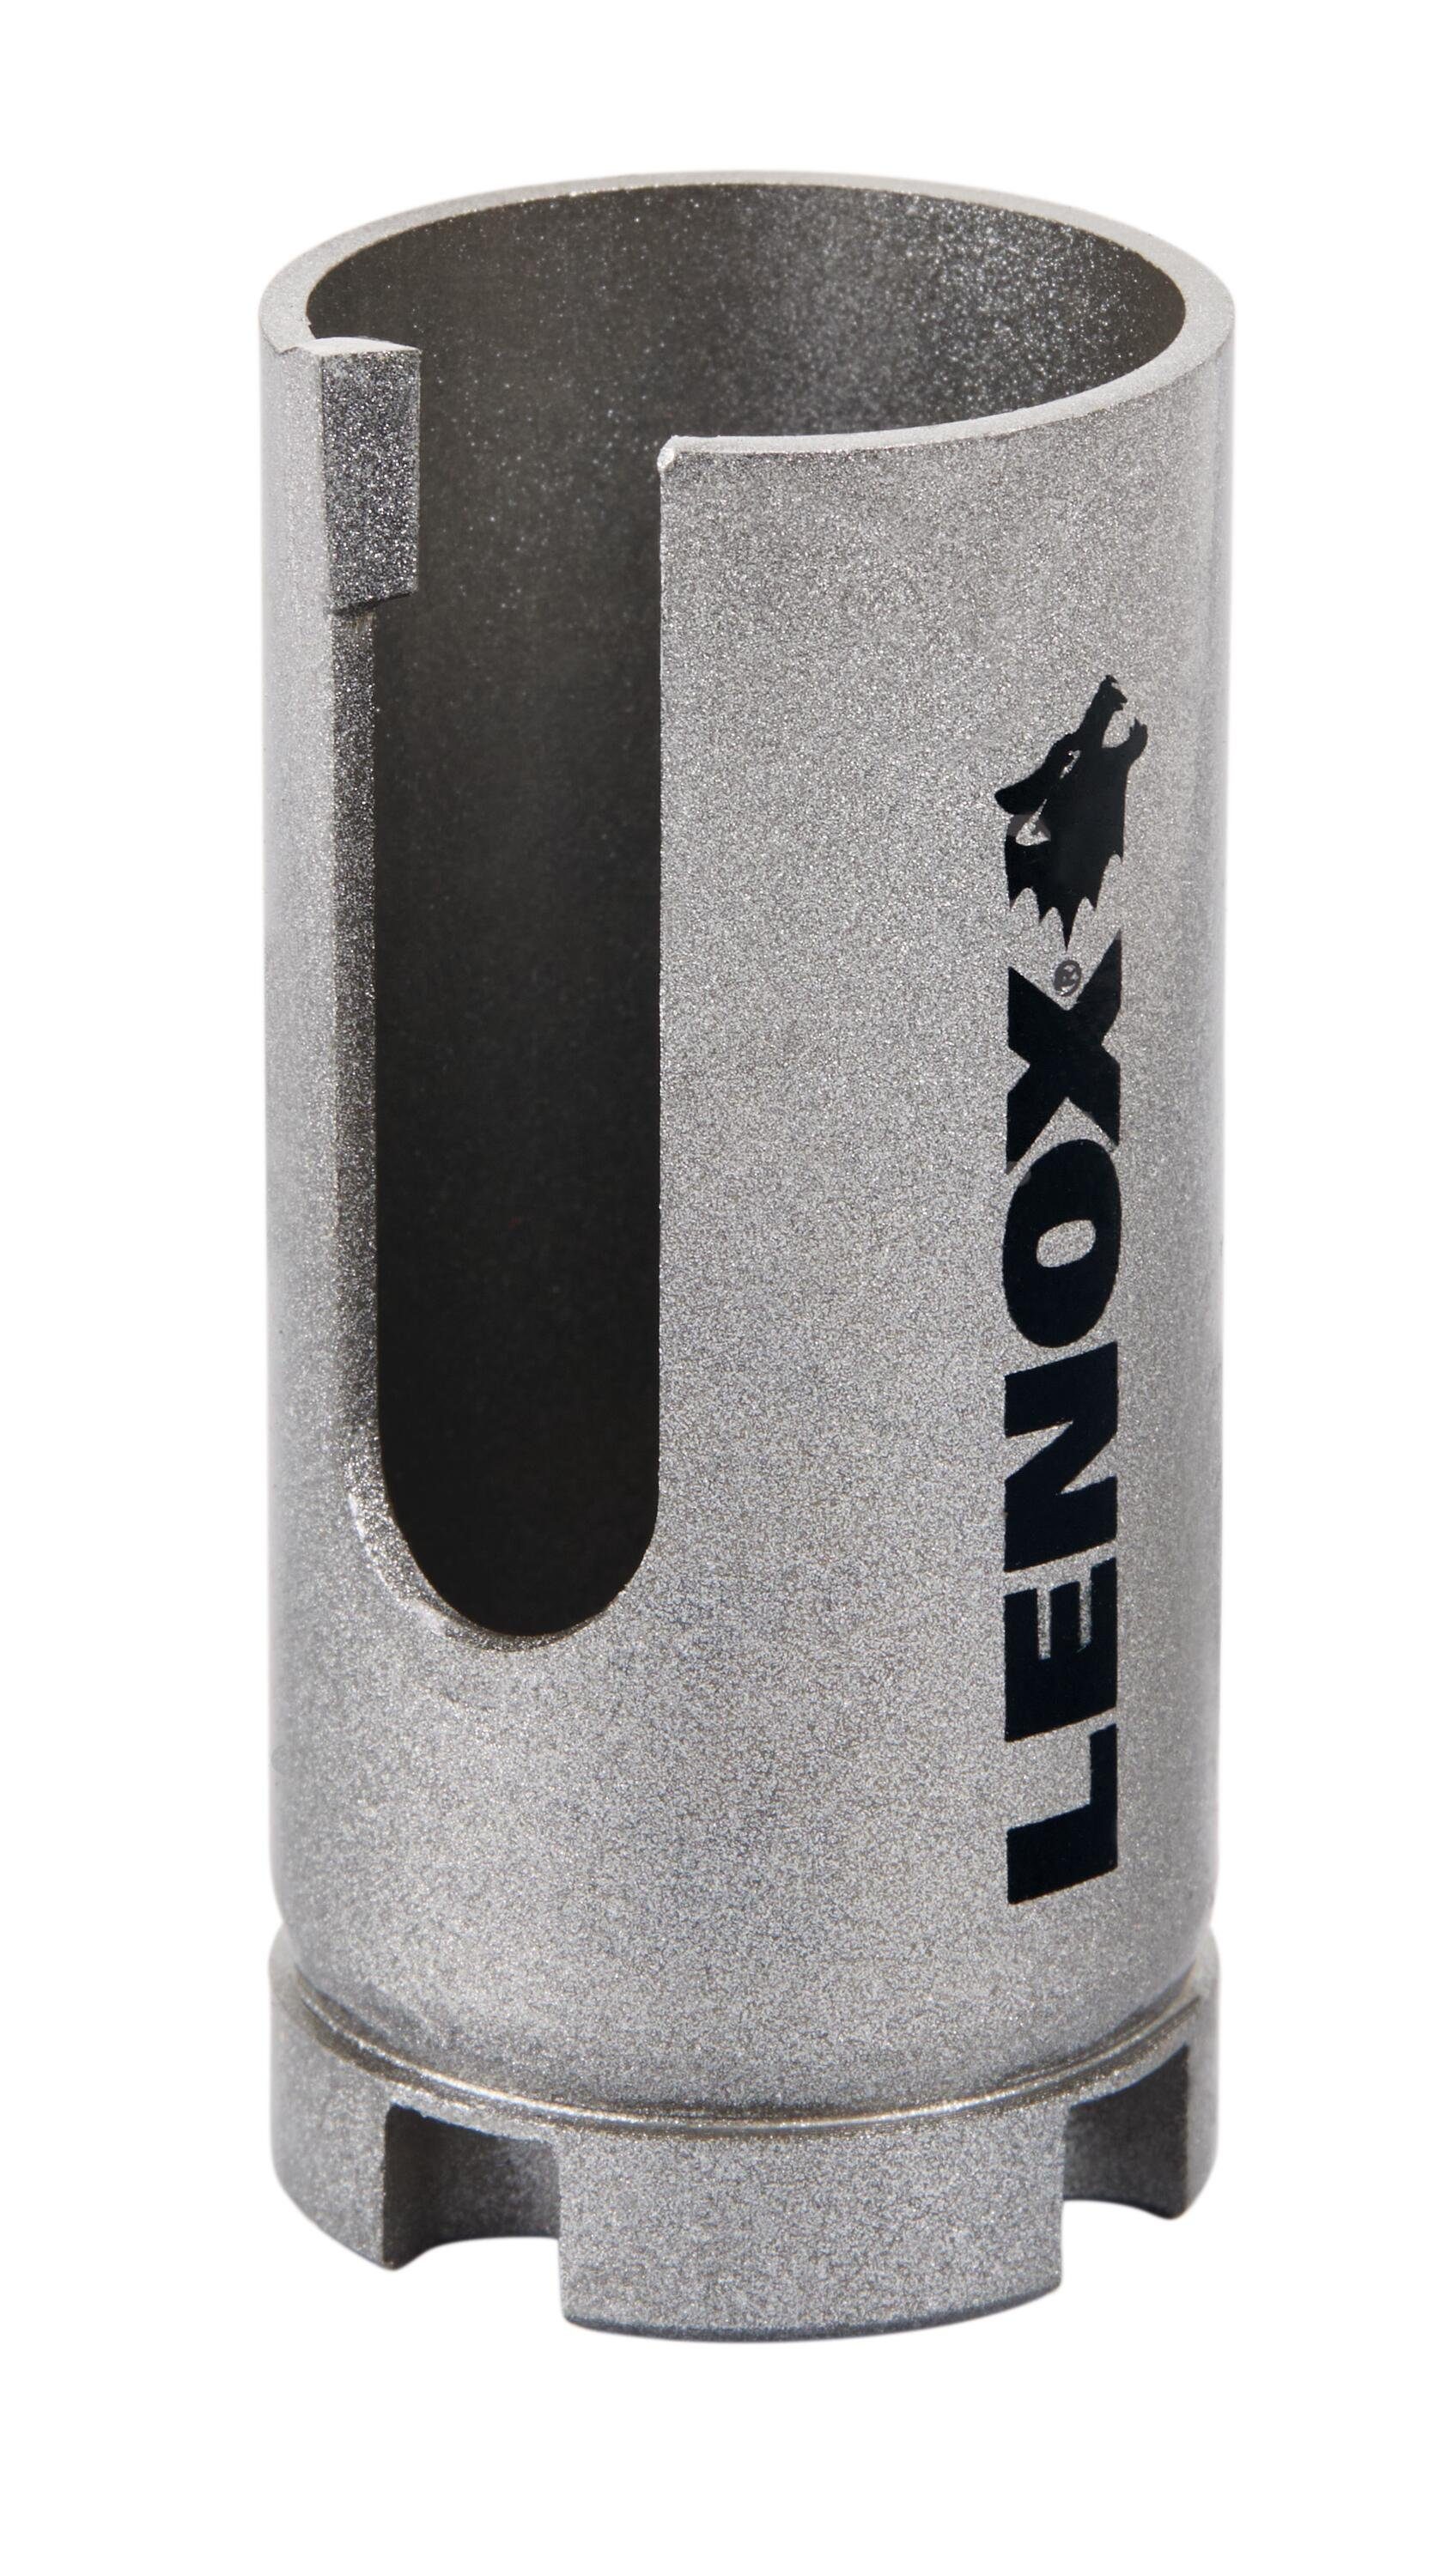 Lenox Lochsäge LXAH41316 Carbide Multi-Material 30 mm, Ø 30 mm